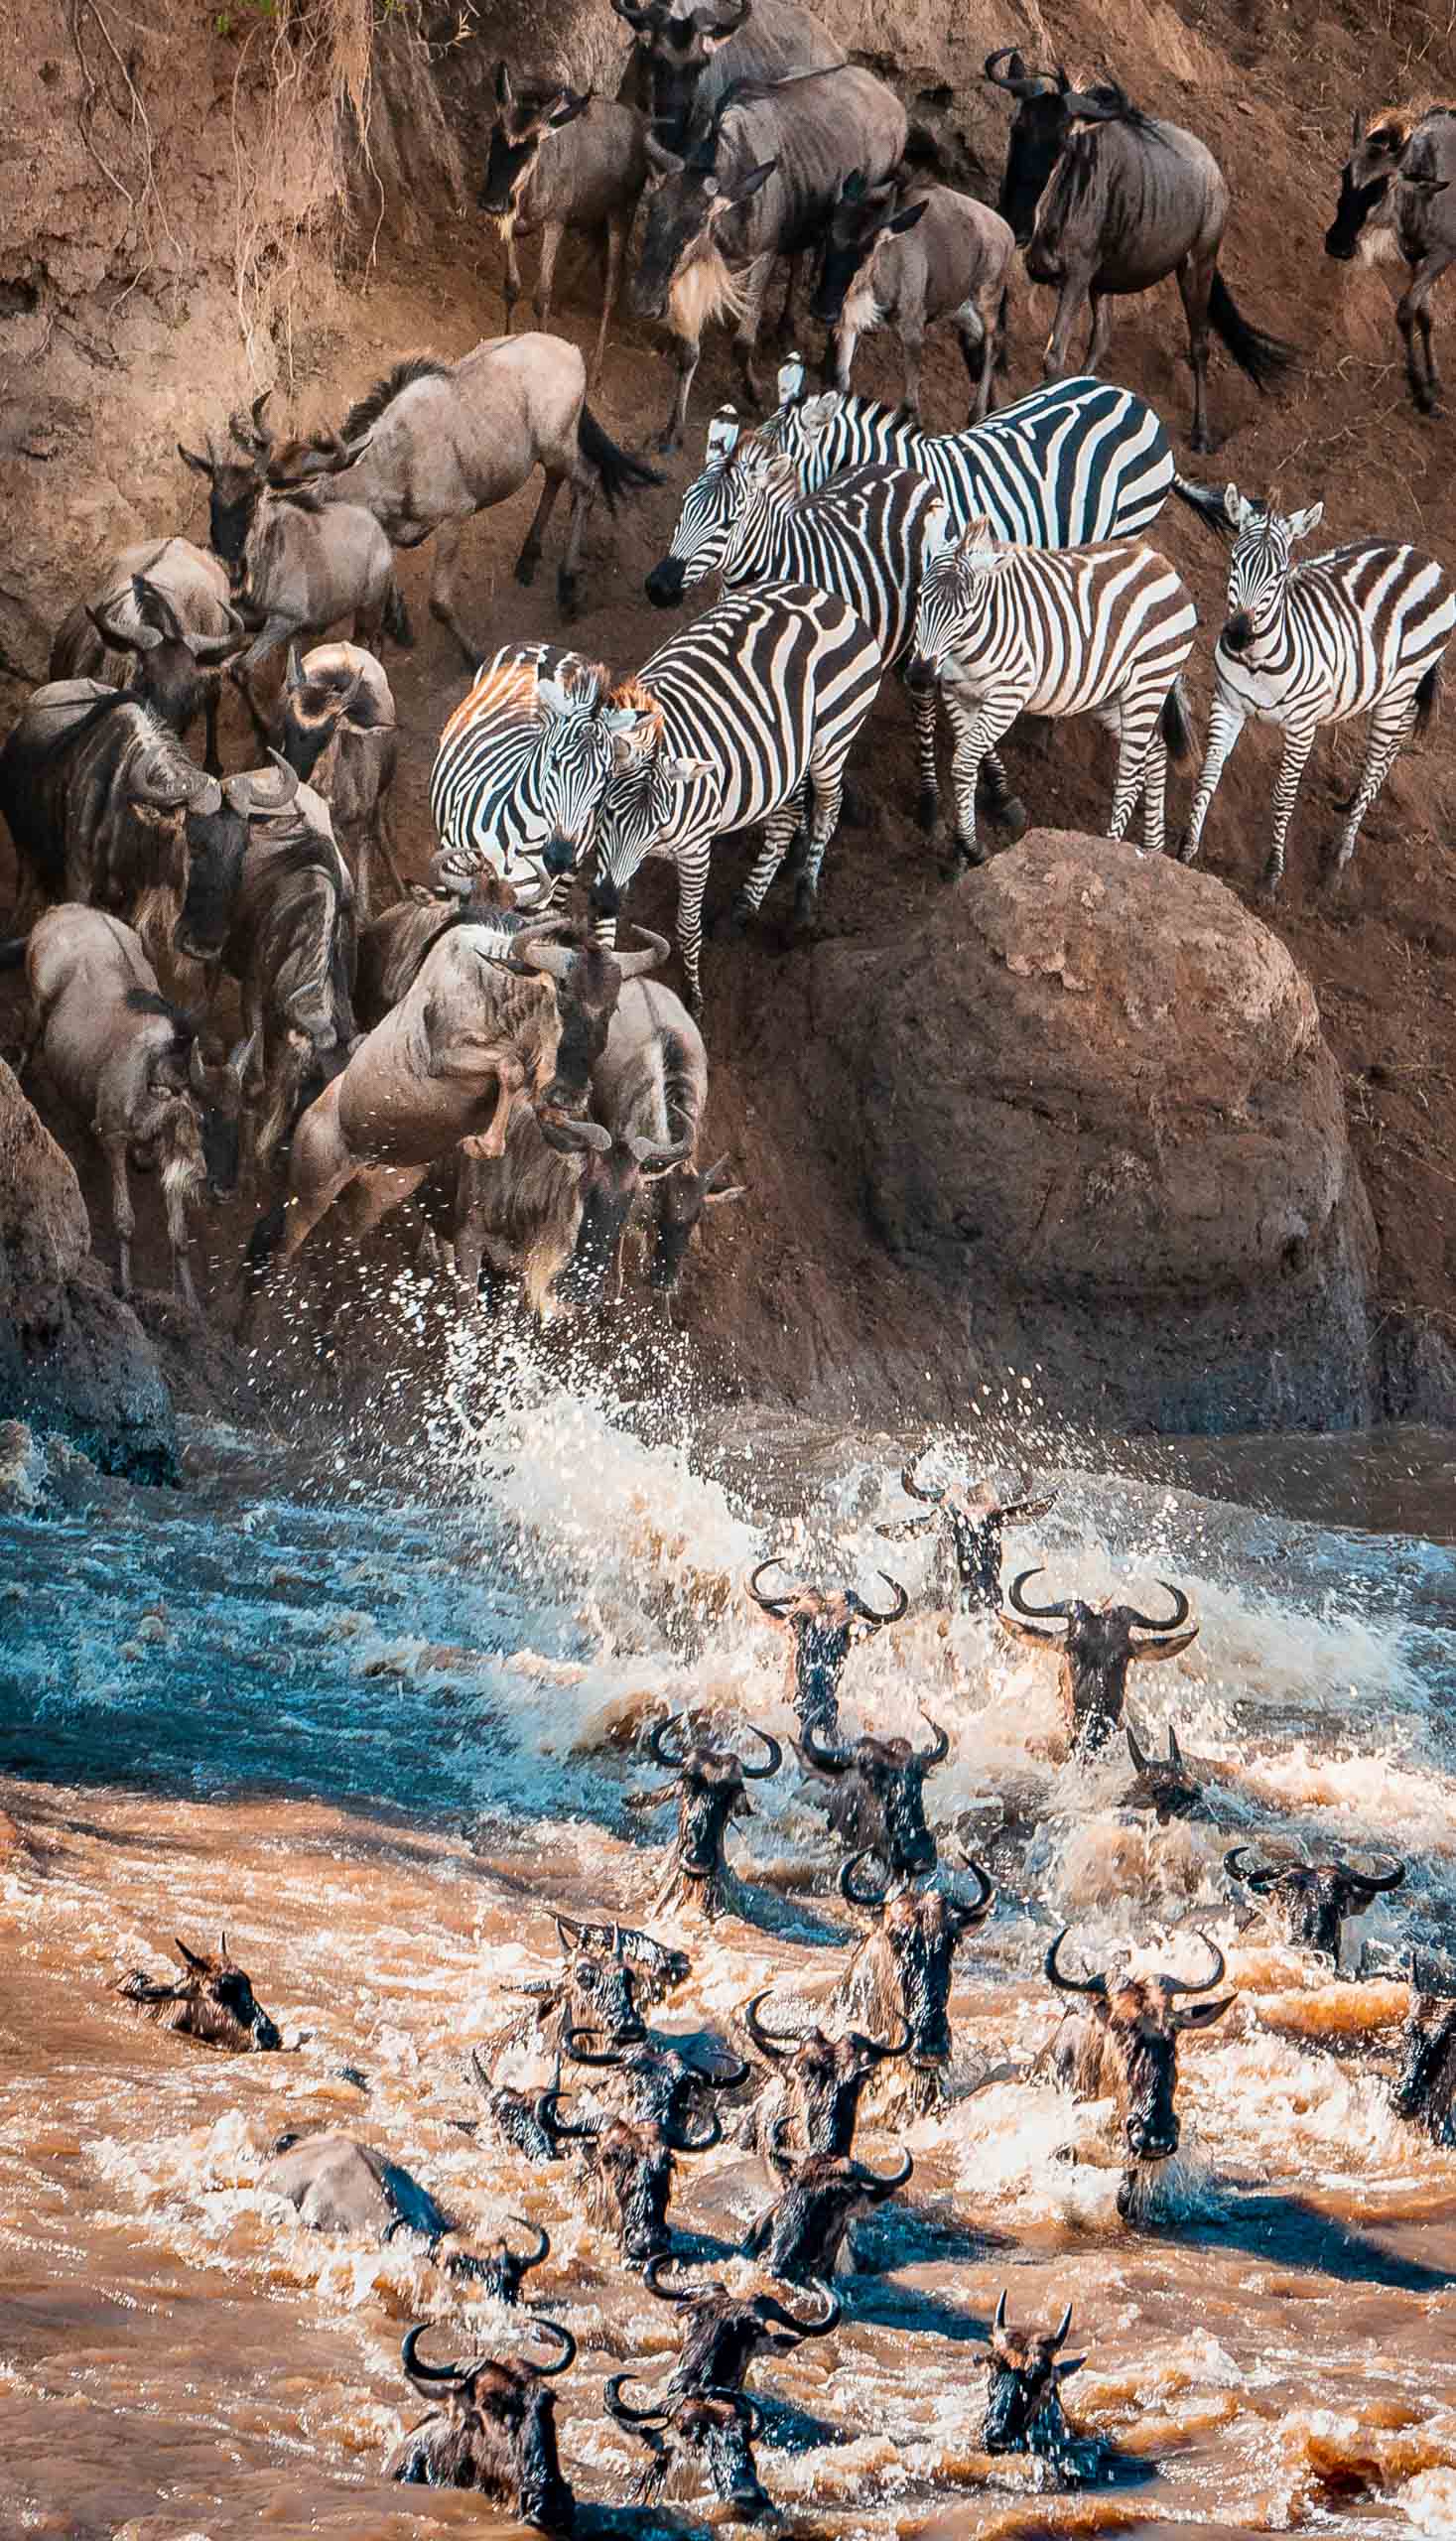 Herds of wildlife in Tanzania.